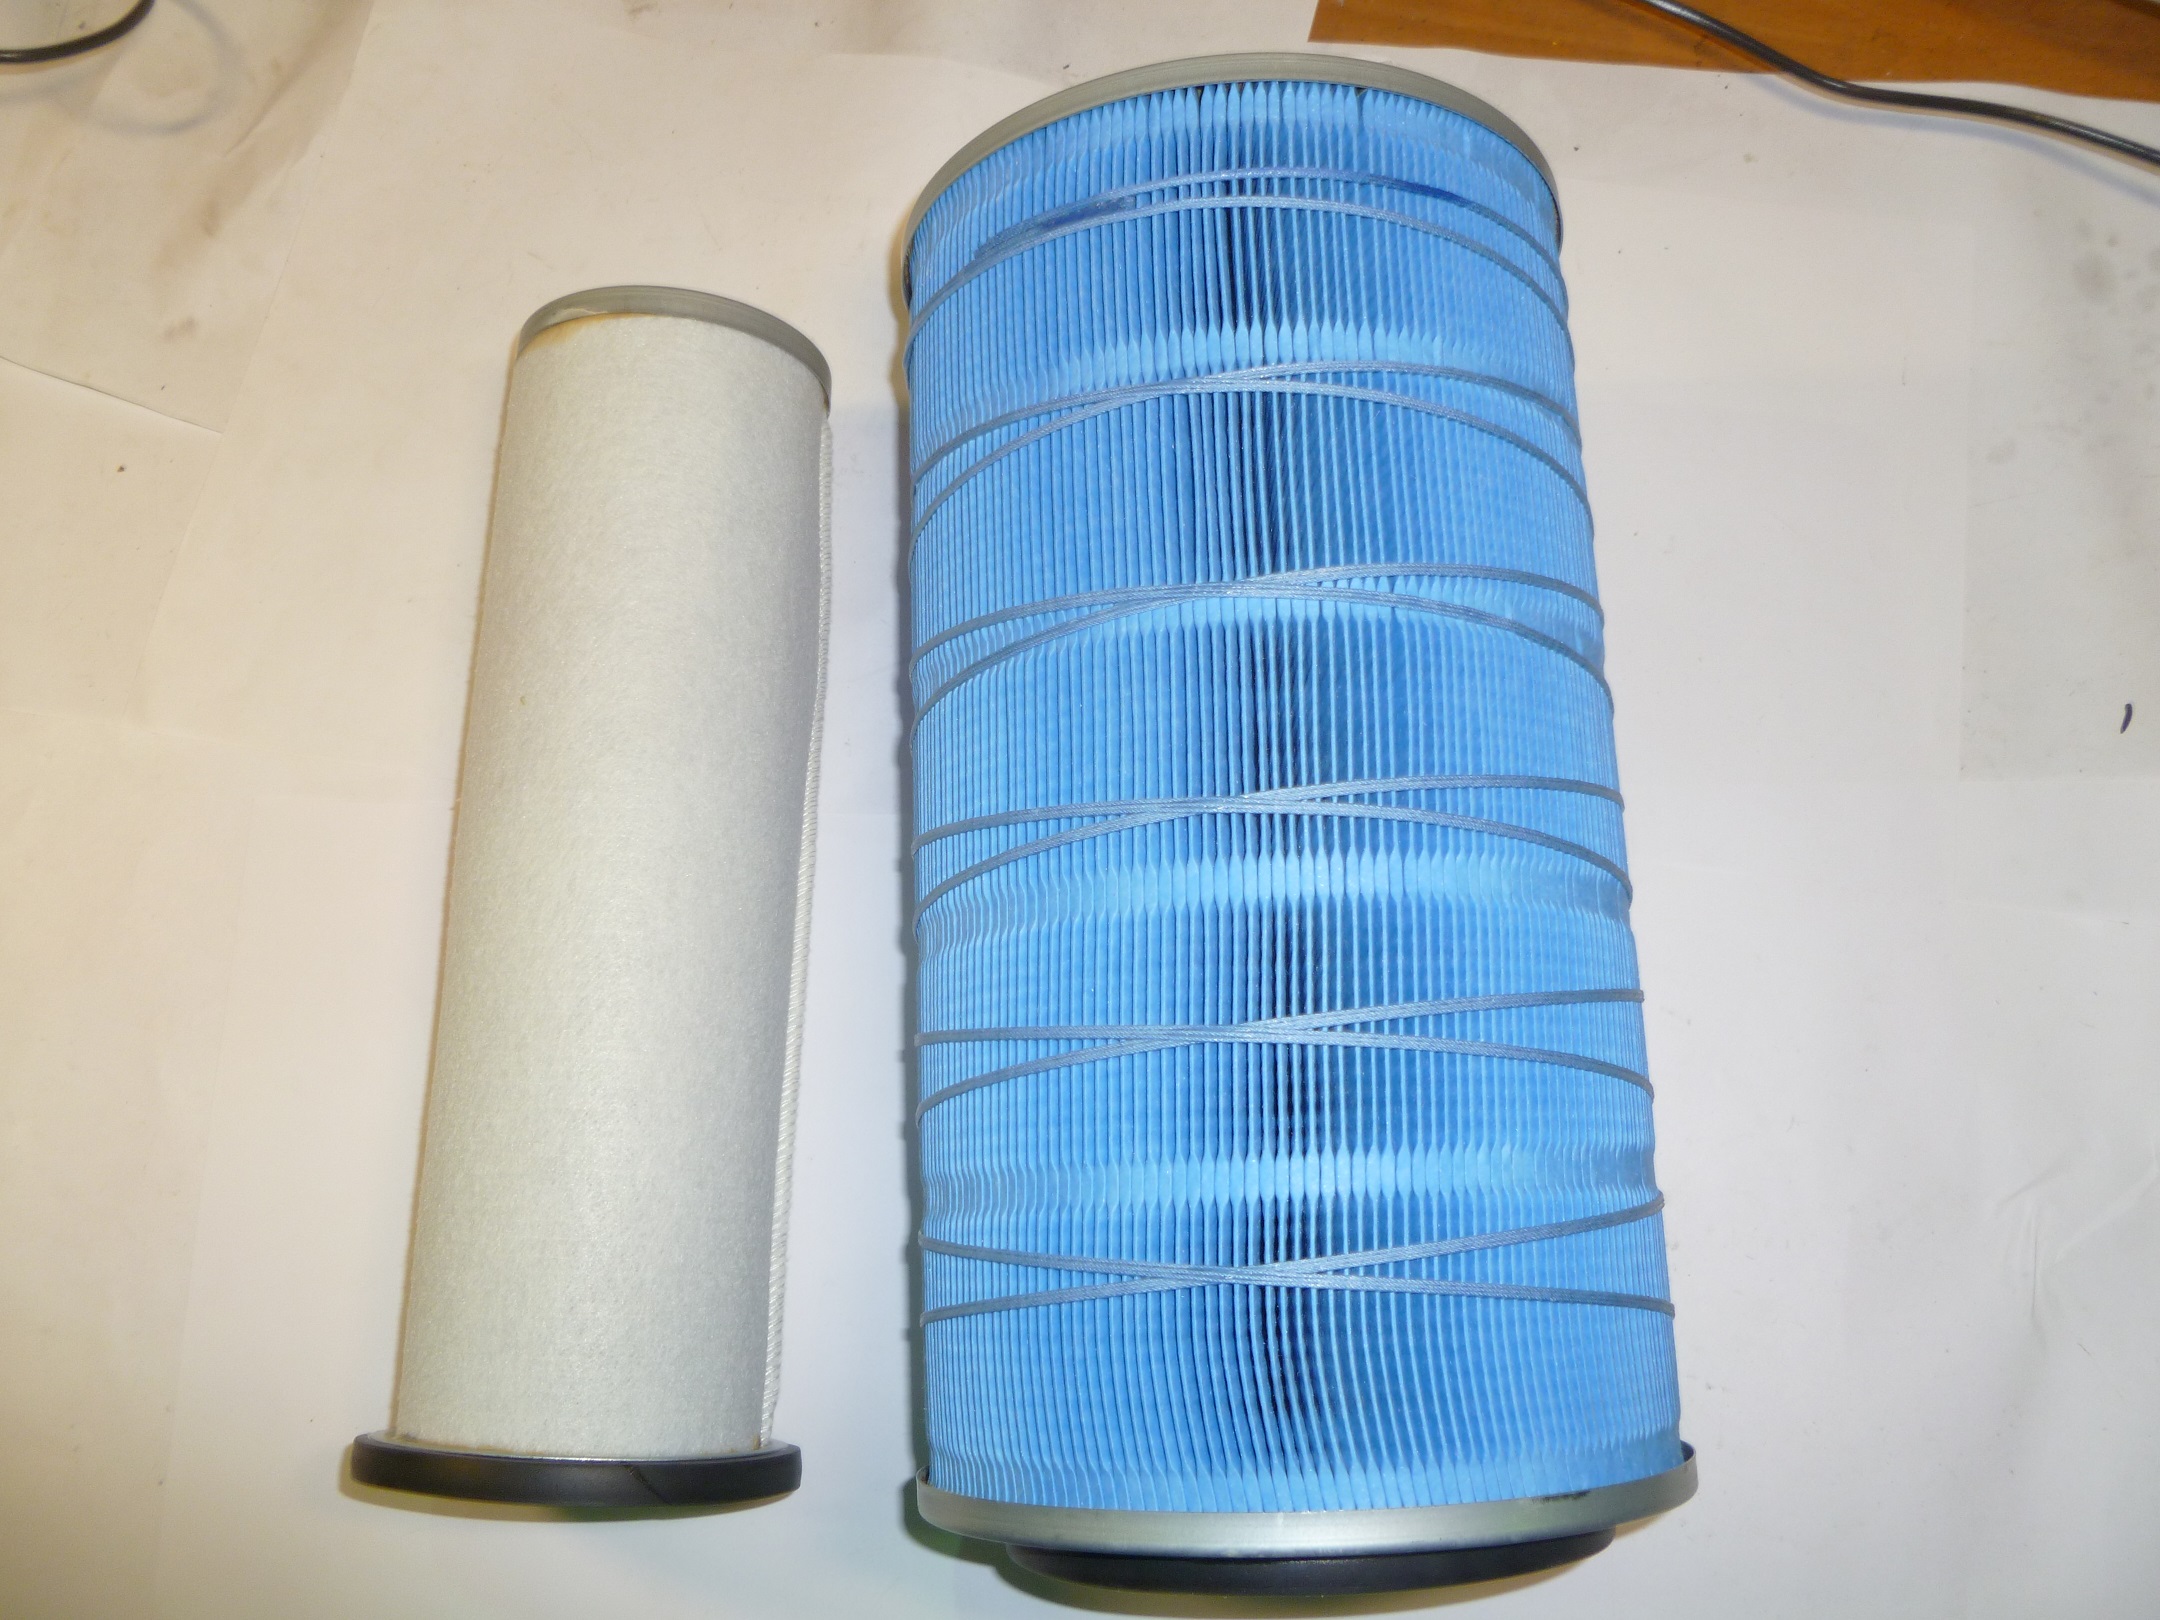 Фильтр воздушный двойной цилиндрический (Ф1-180х99х335;Ф2-95х80х320)TDY 40 4LE/Air filter